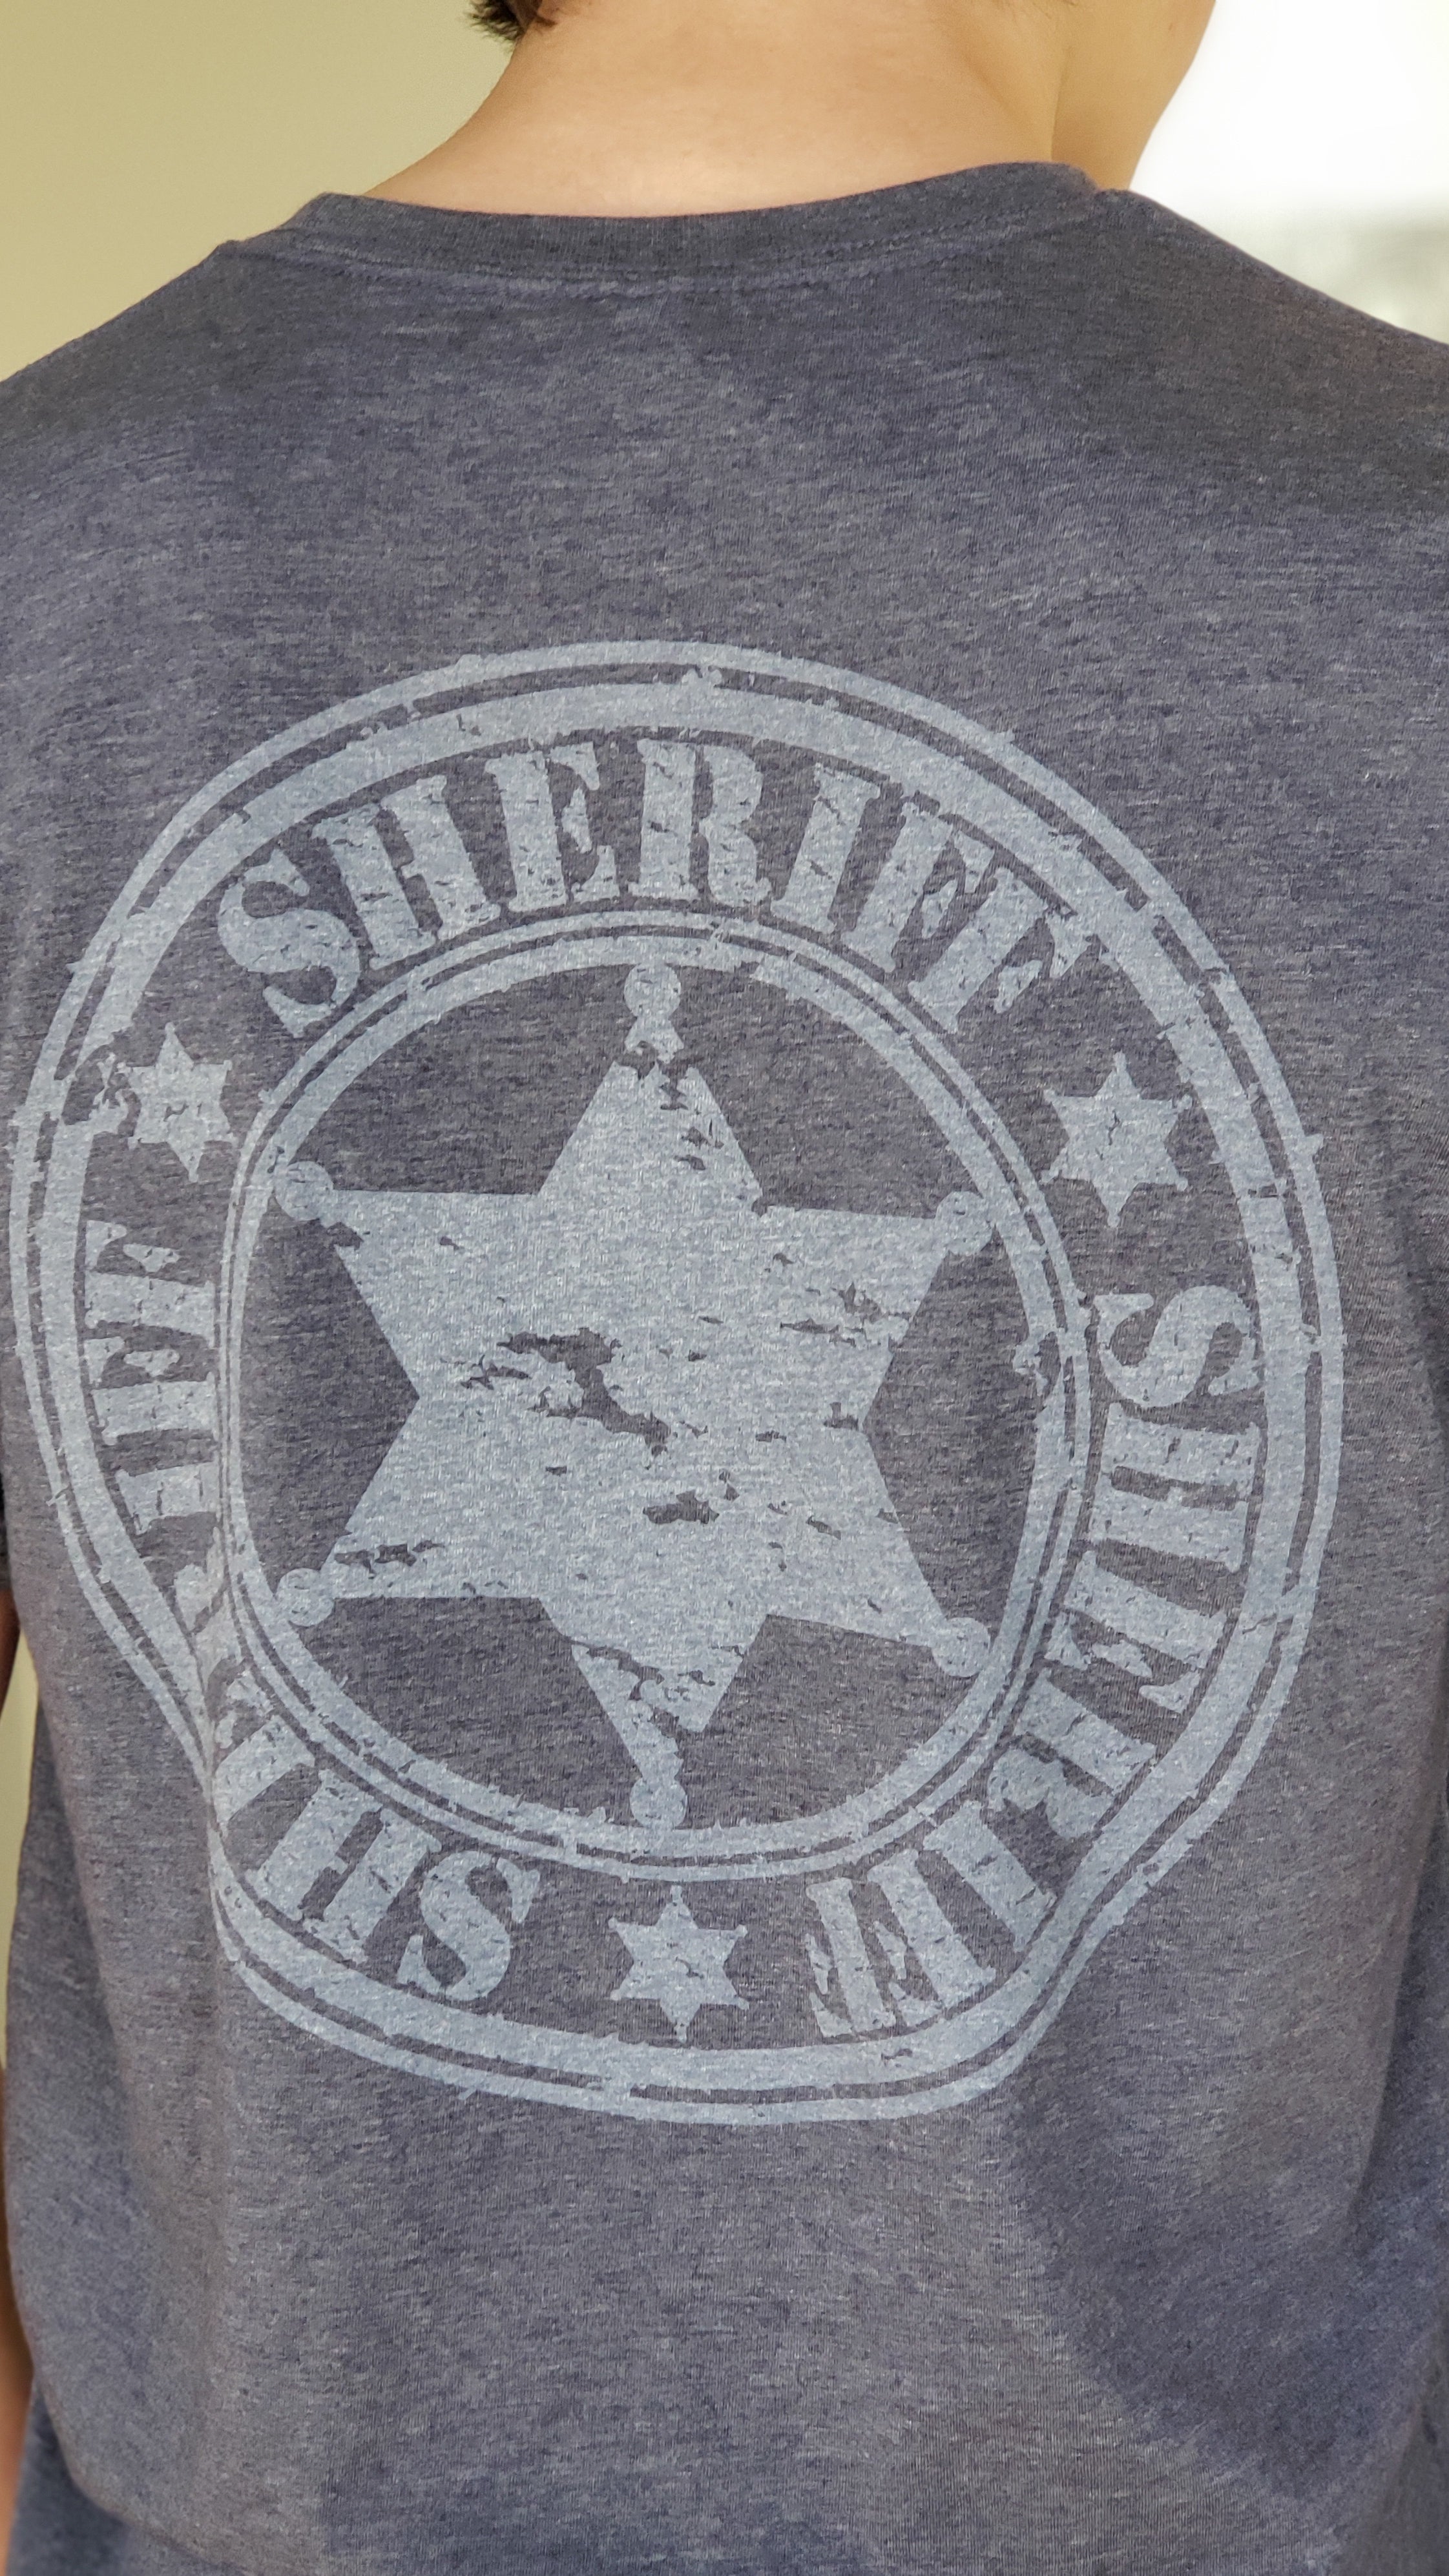 Sheriff Tee - Do Work That Matters